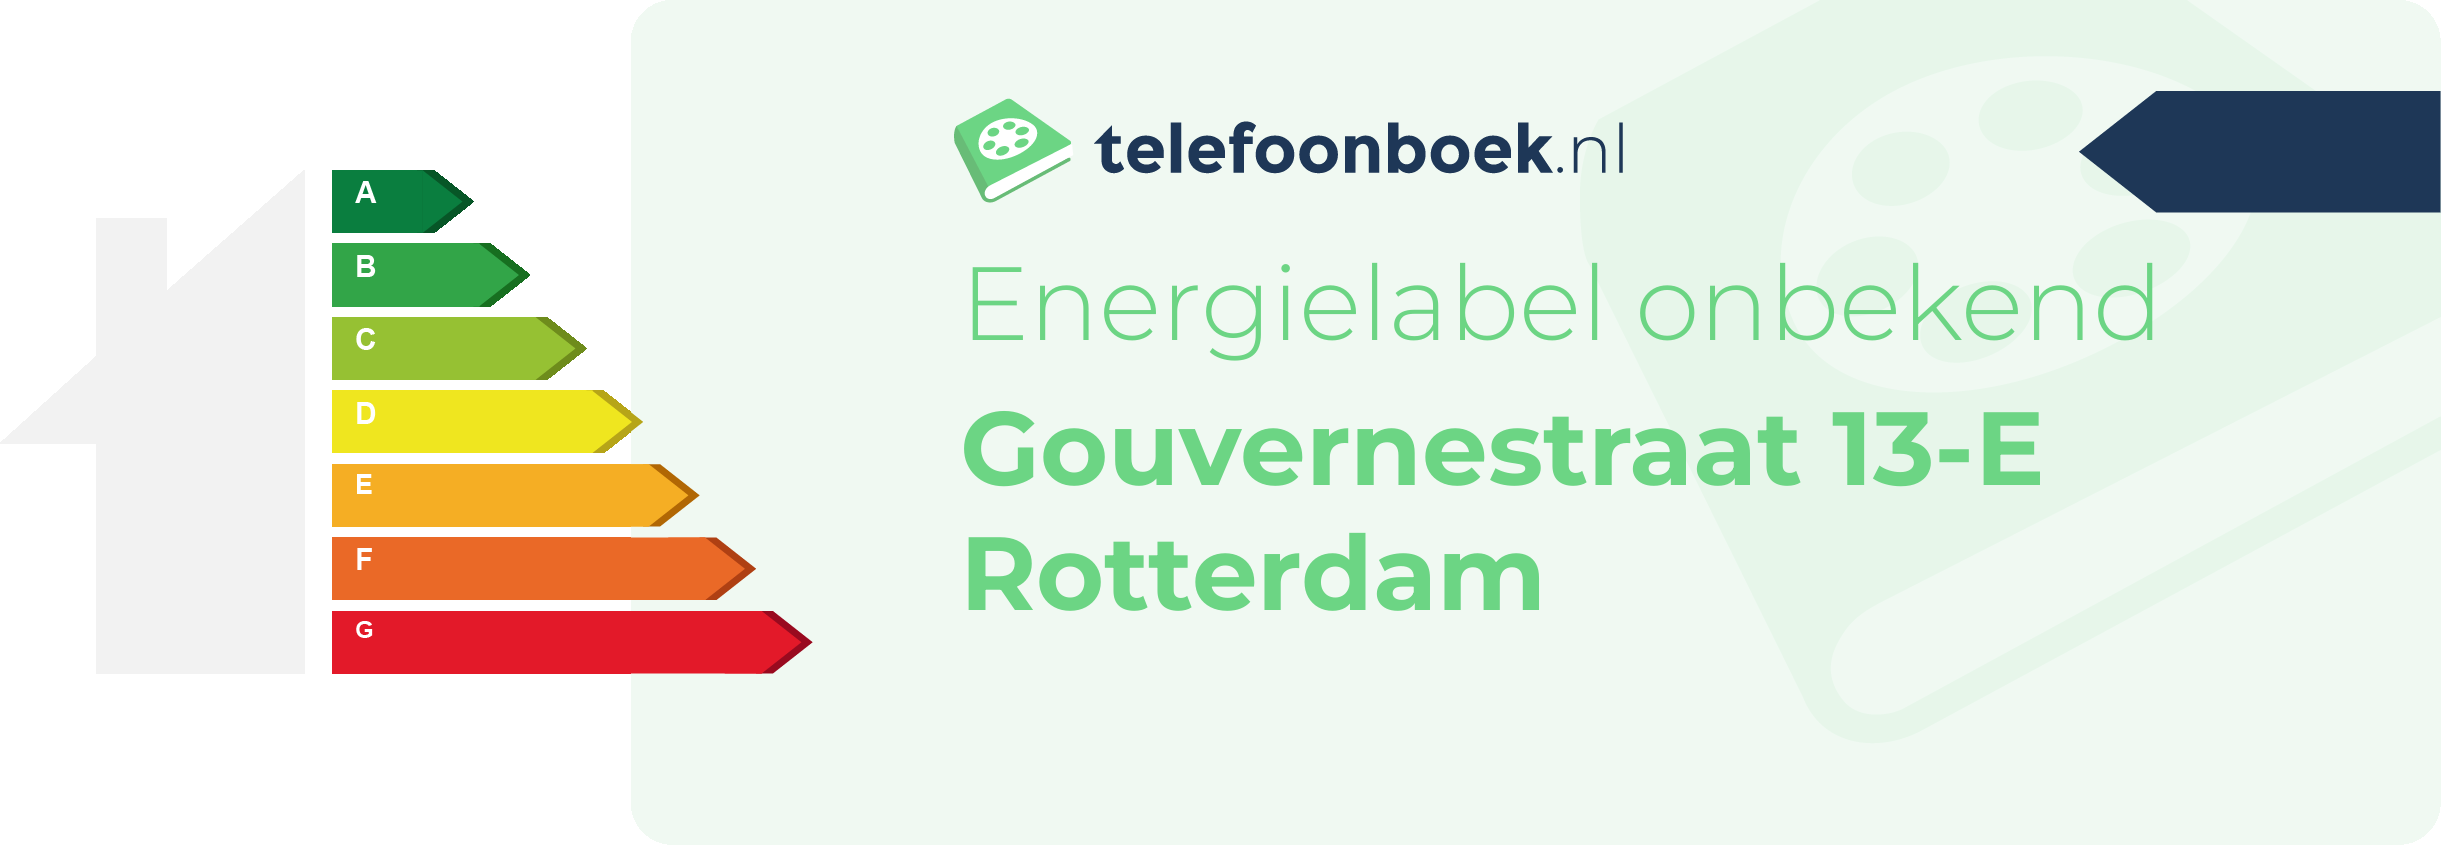 Energielabel Gouvernestraat 13-E Rotterdam